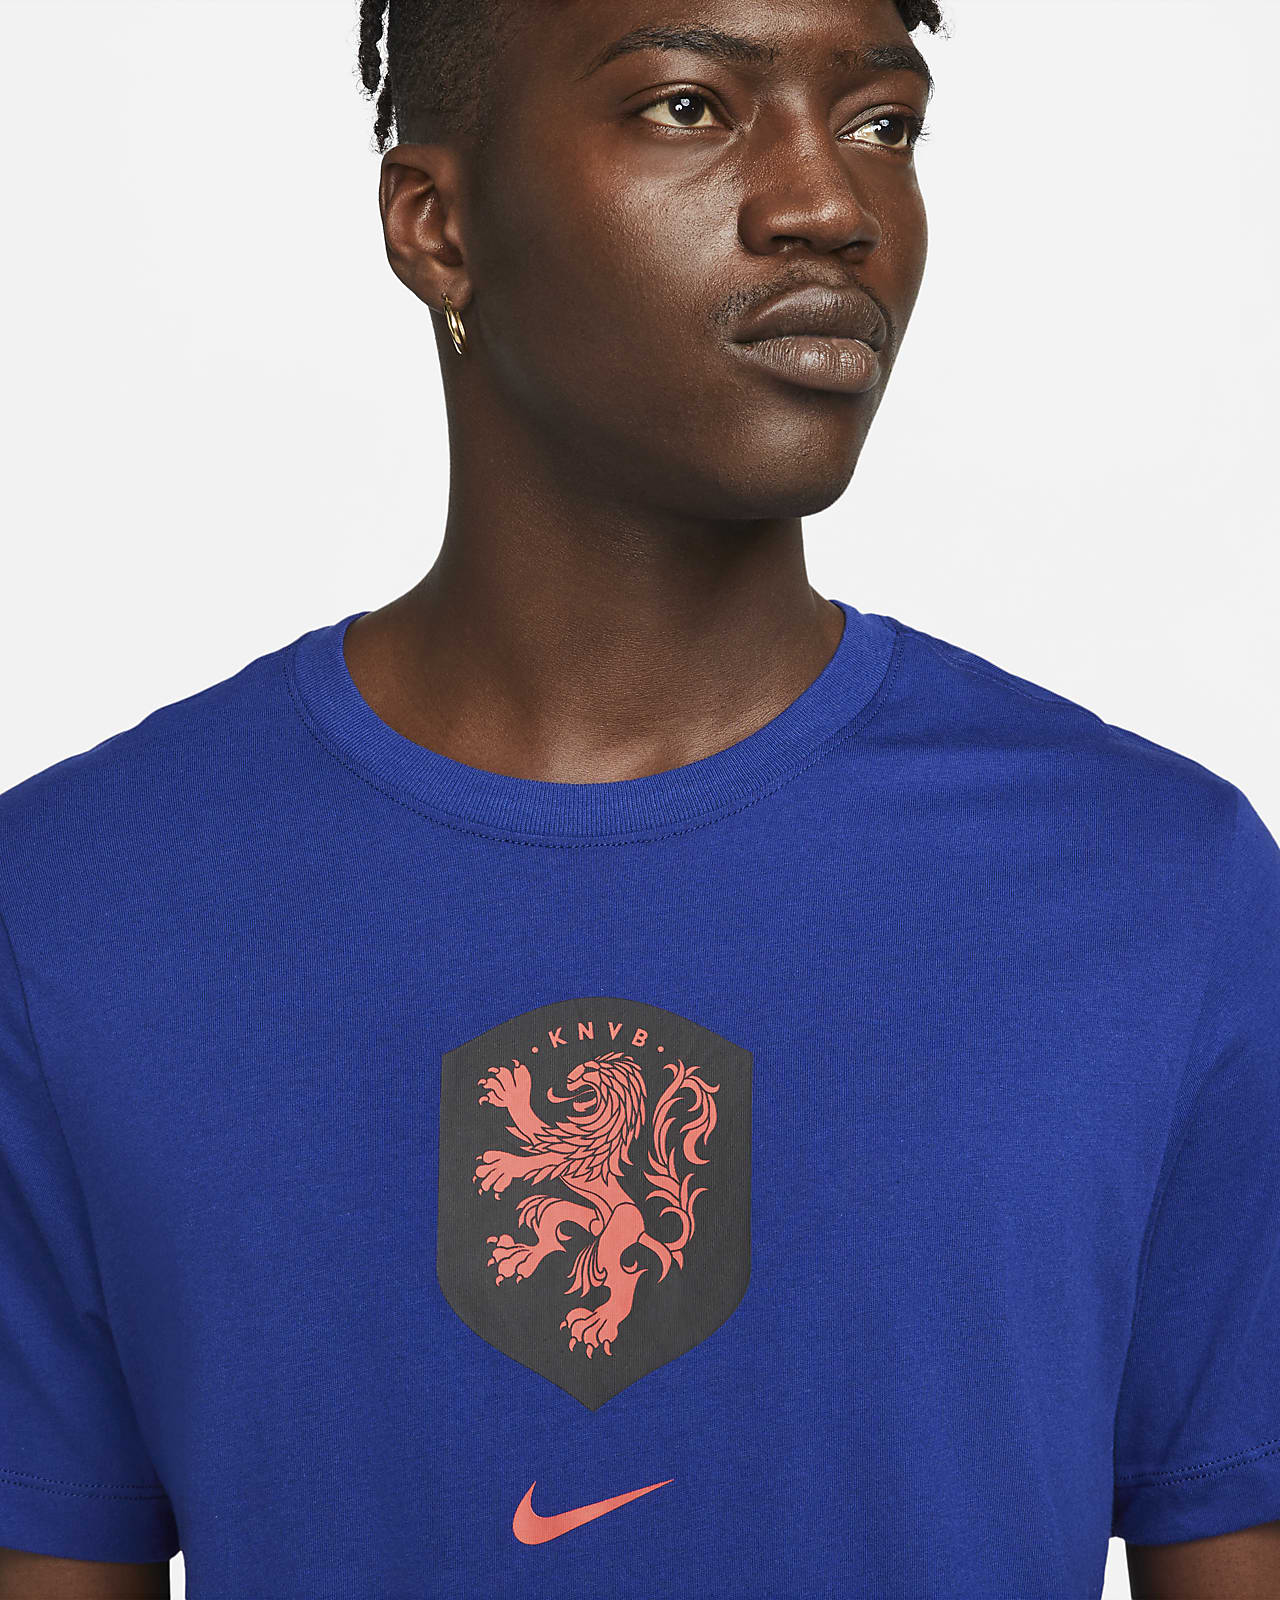 Netherlands National Team Crest Men's Nike Soccer T-Shirt.